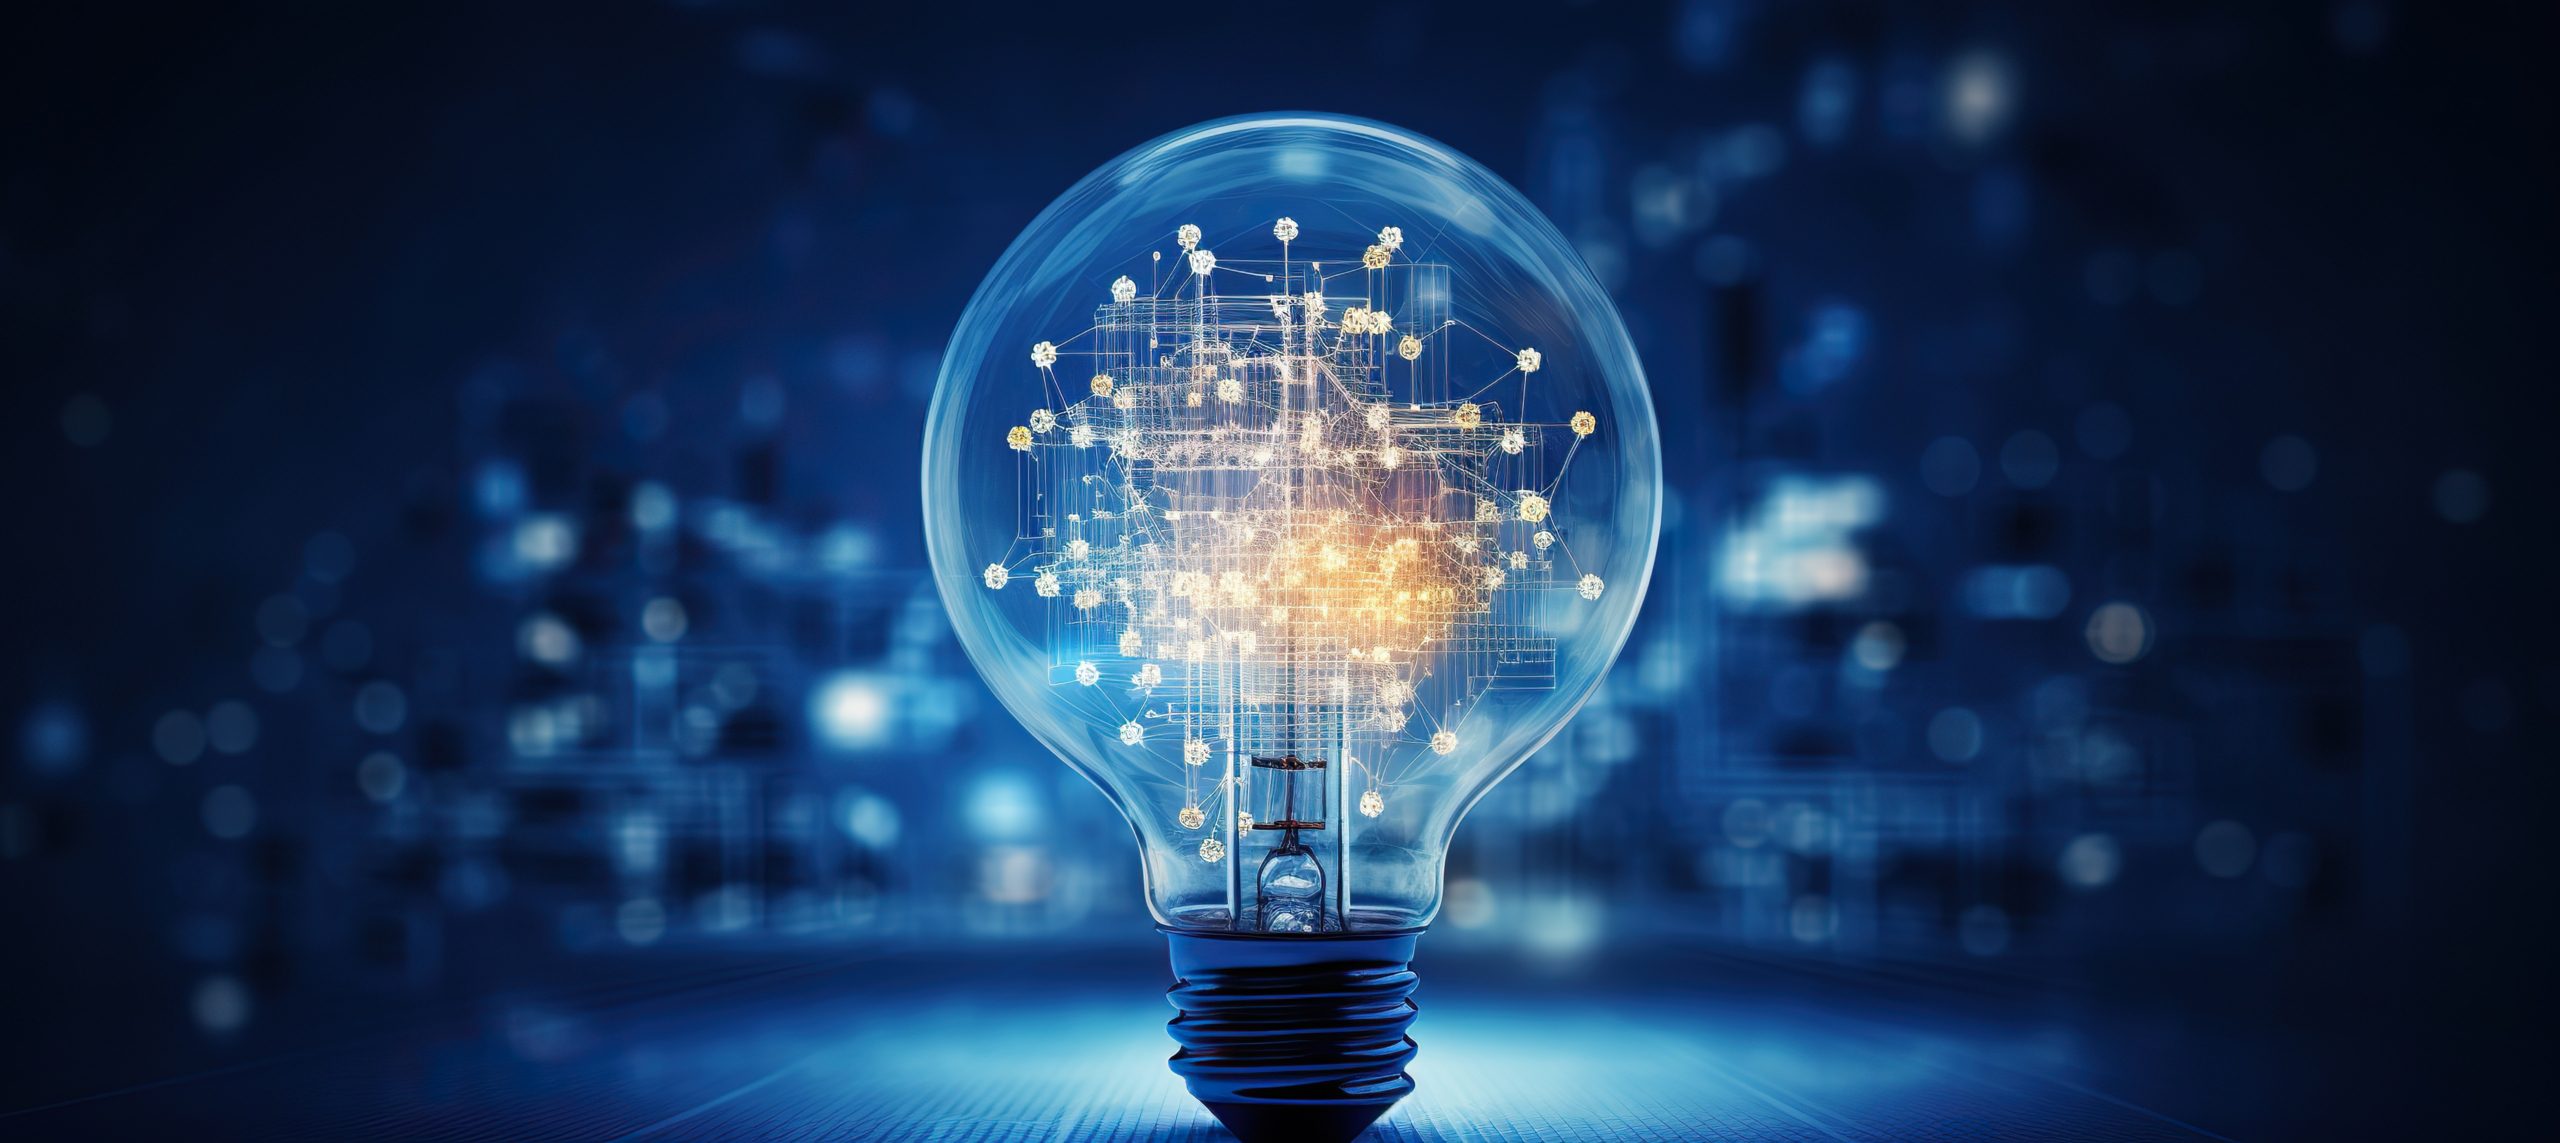 Broker-dealer technology represented by lightbulb with technology leads inside